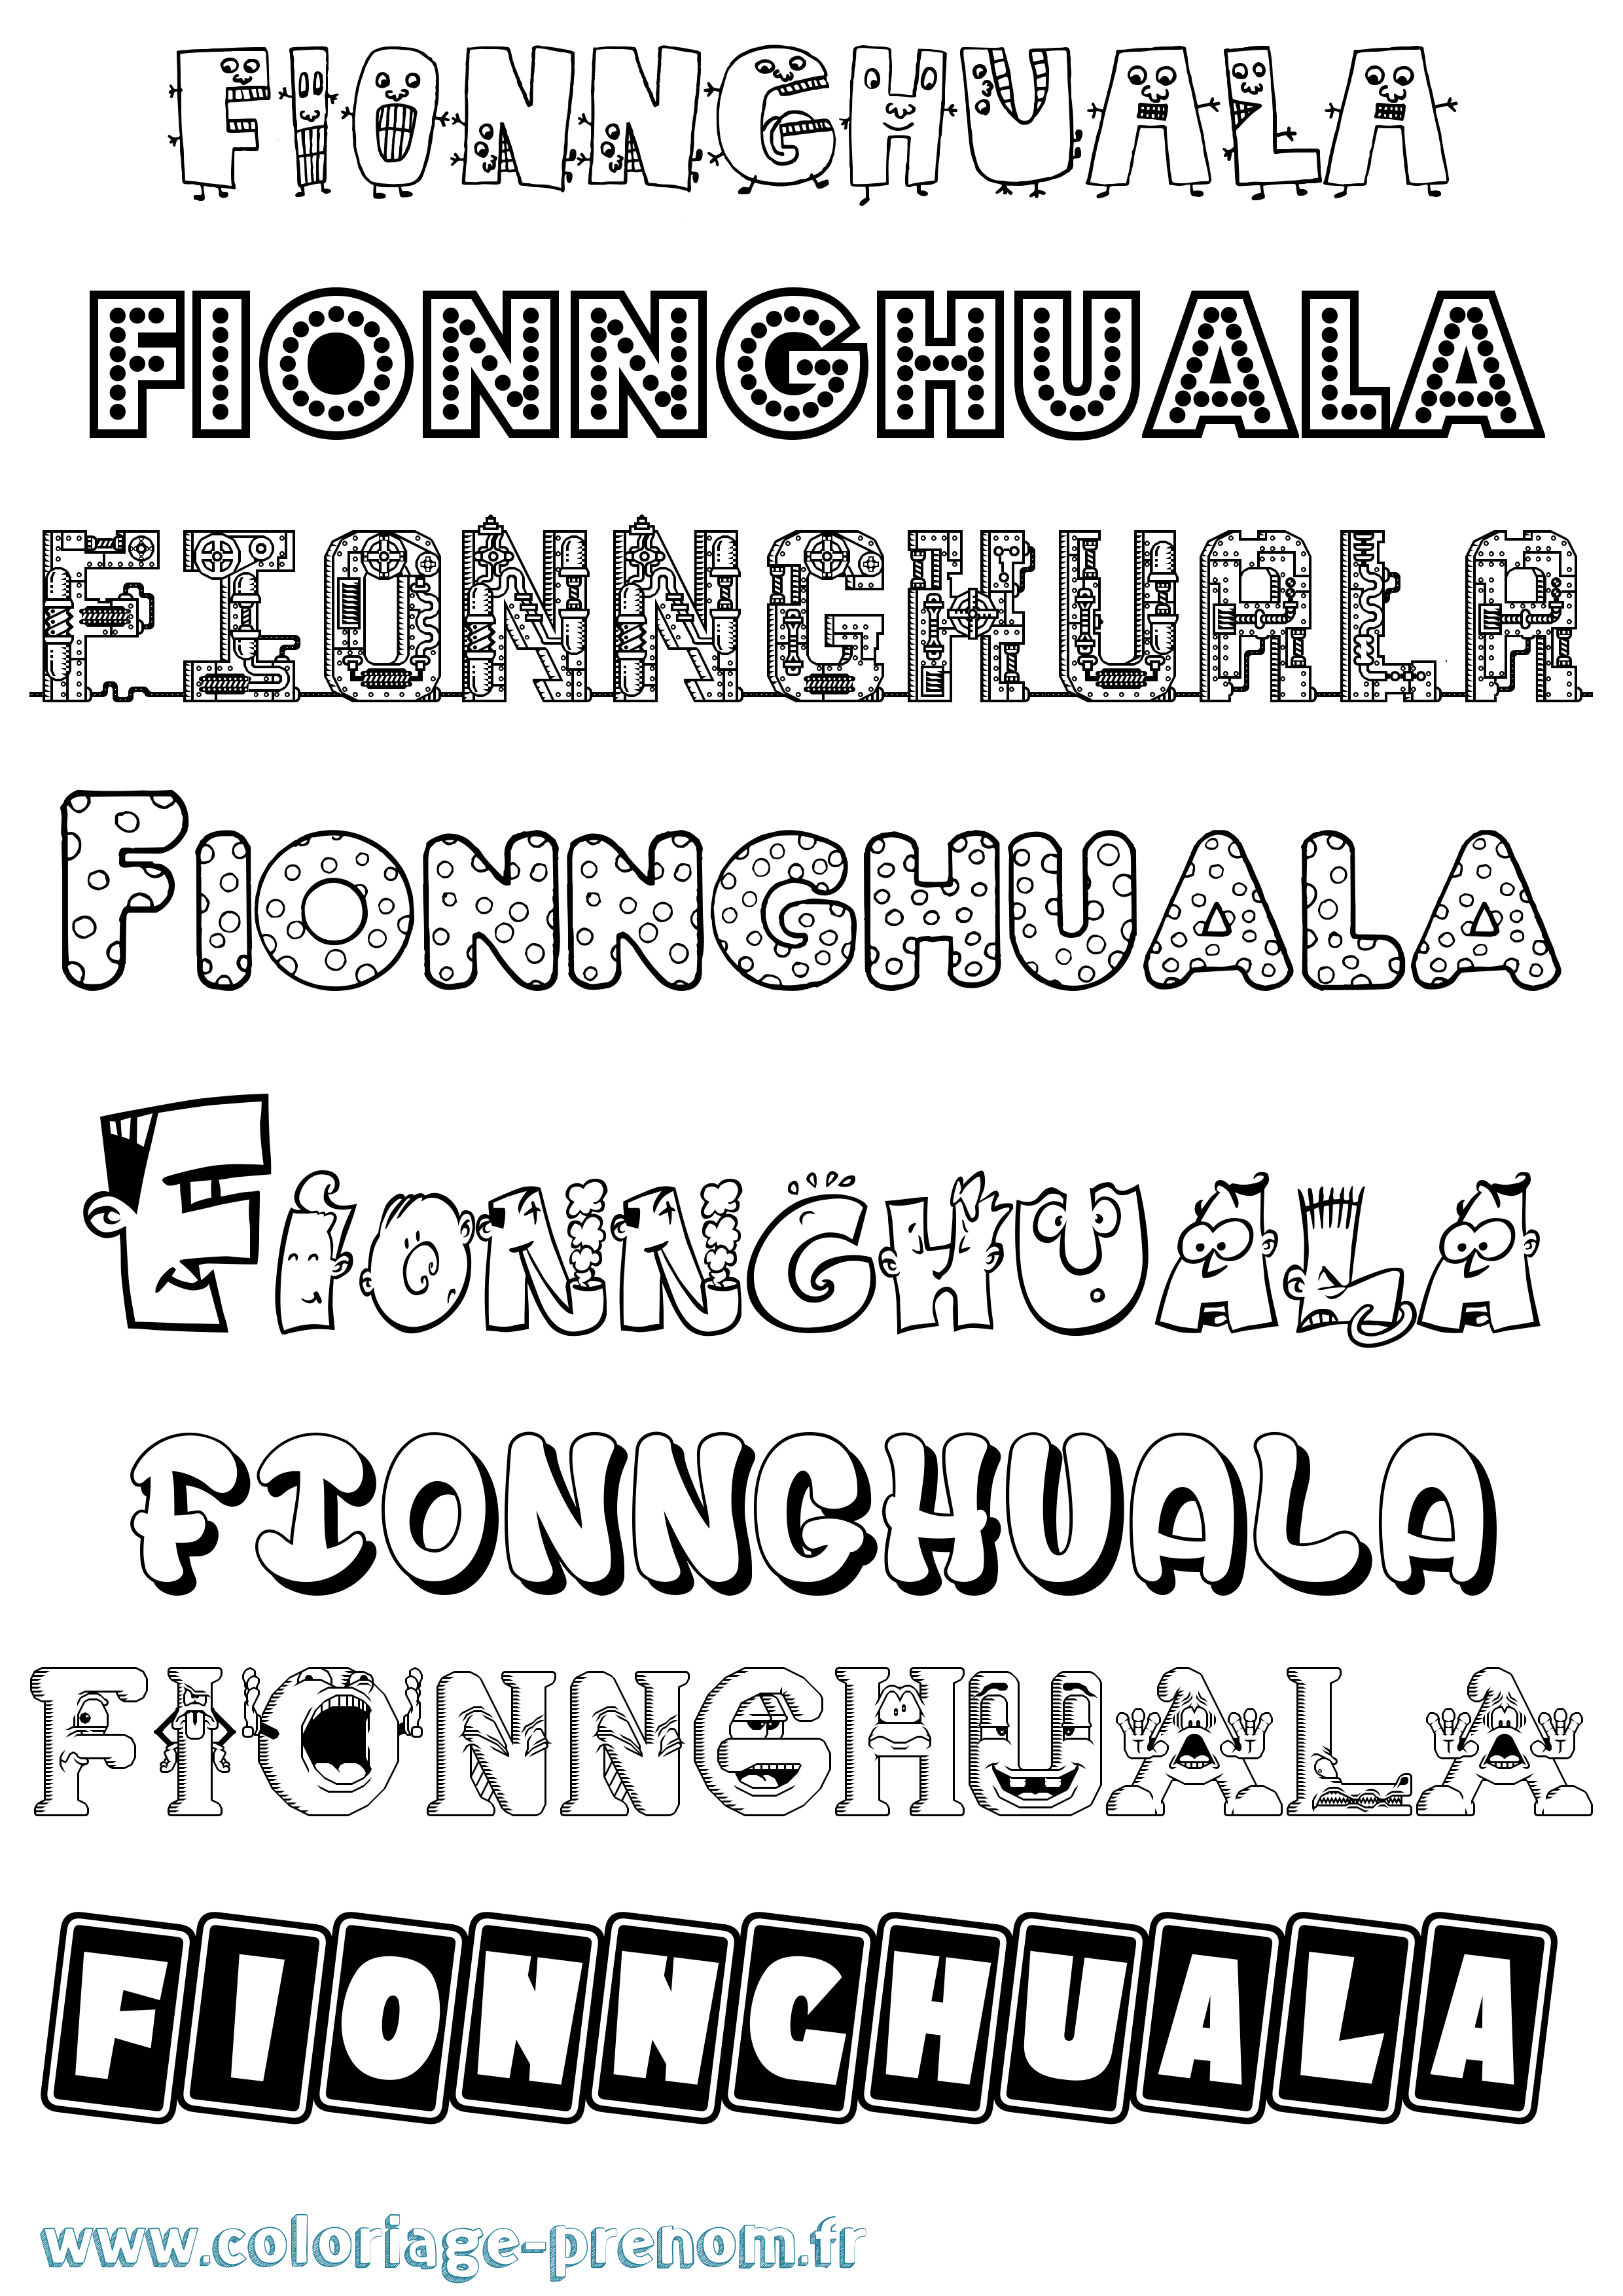 Coloriage prénom Fionnghuala Fun